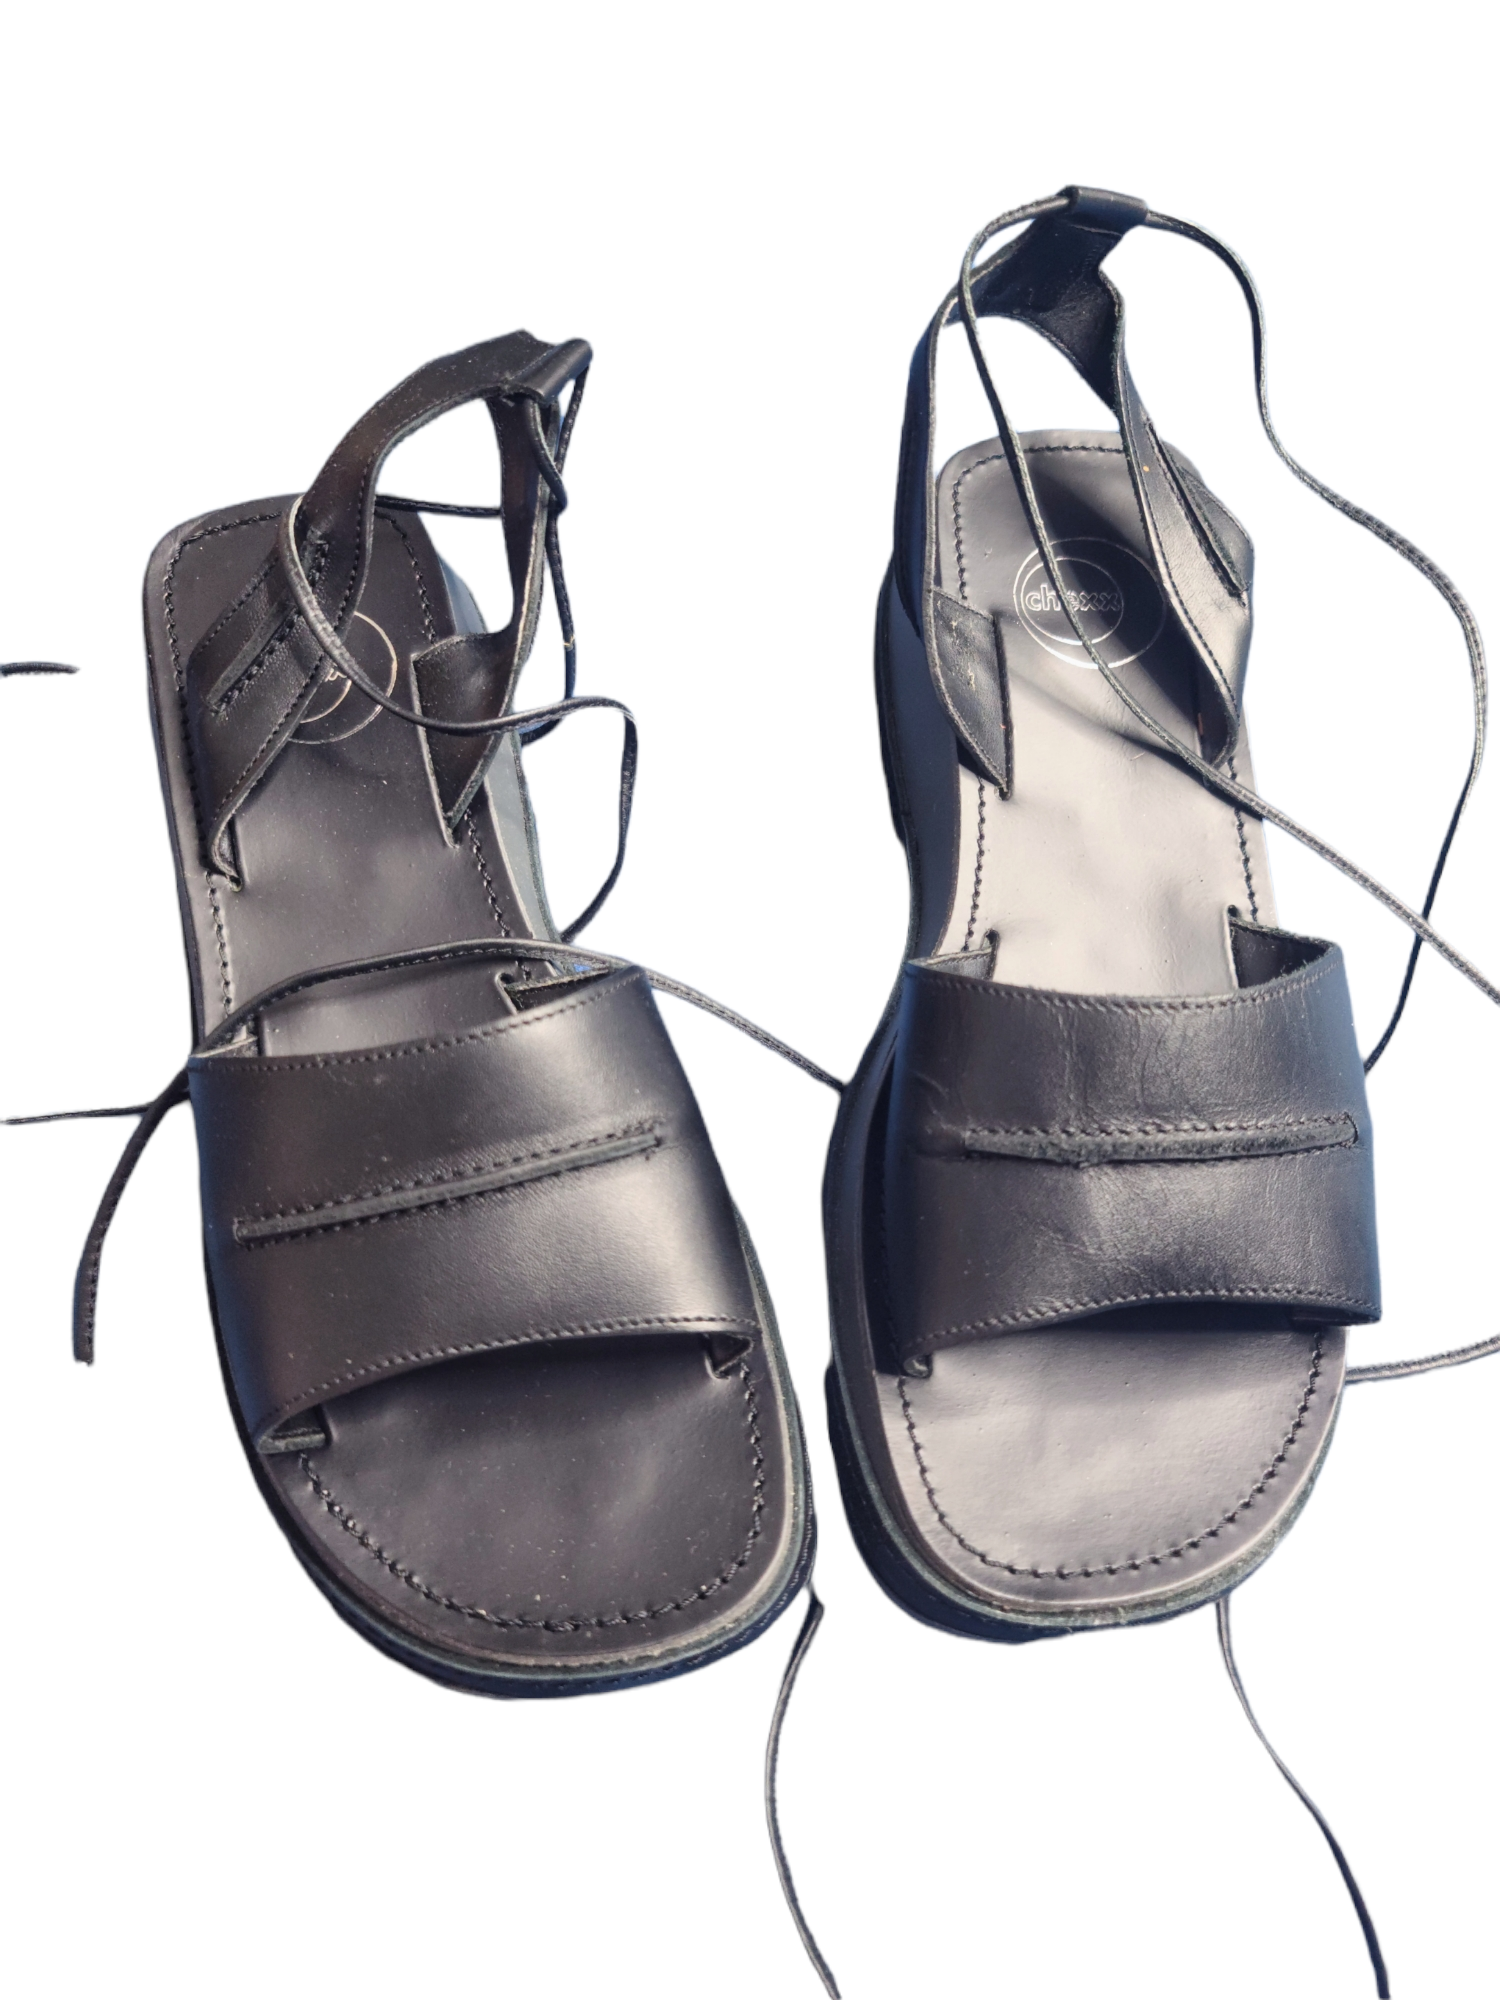 Bratz shoes 90s platform grunge vintage sandales noires